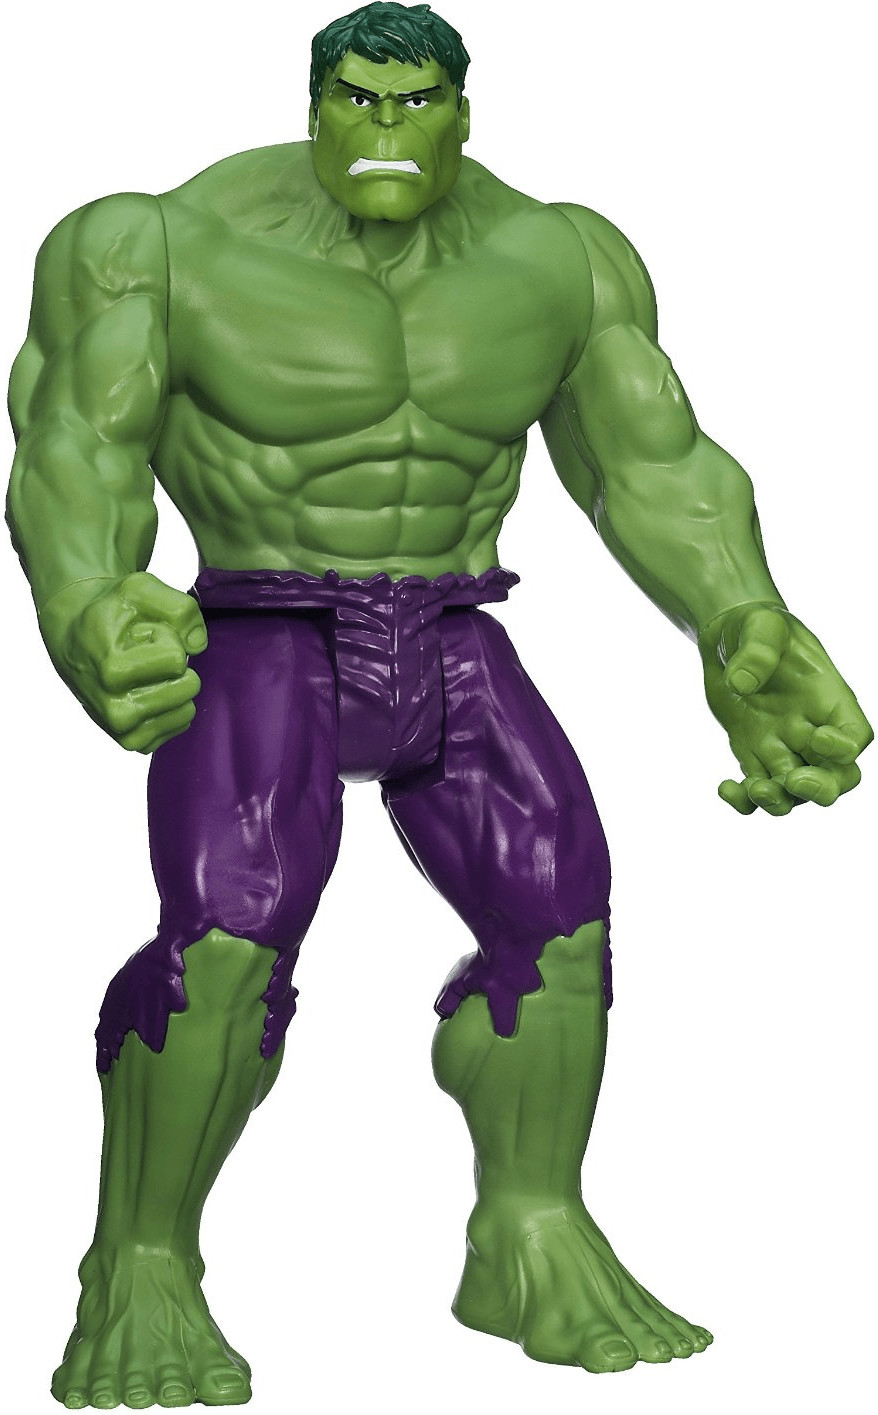 Hasbro Avengers Titan Hero Series Hulk Figure (A4810)